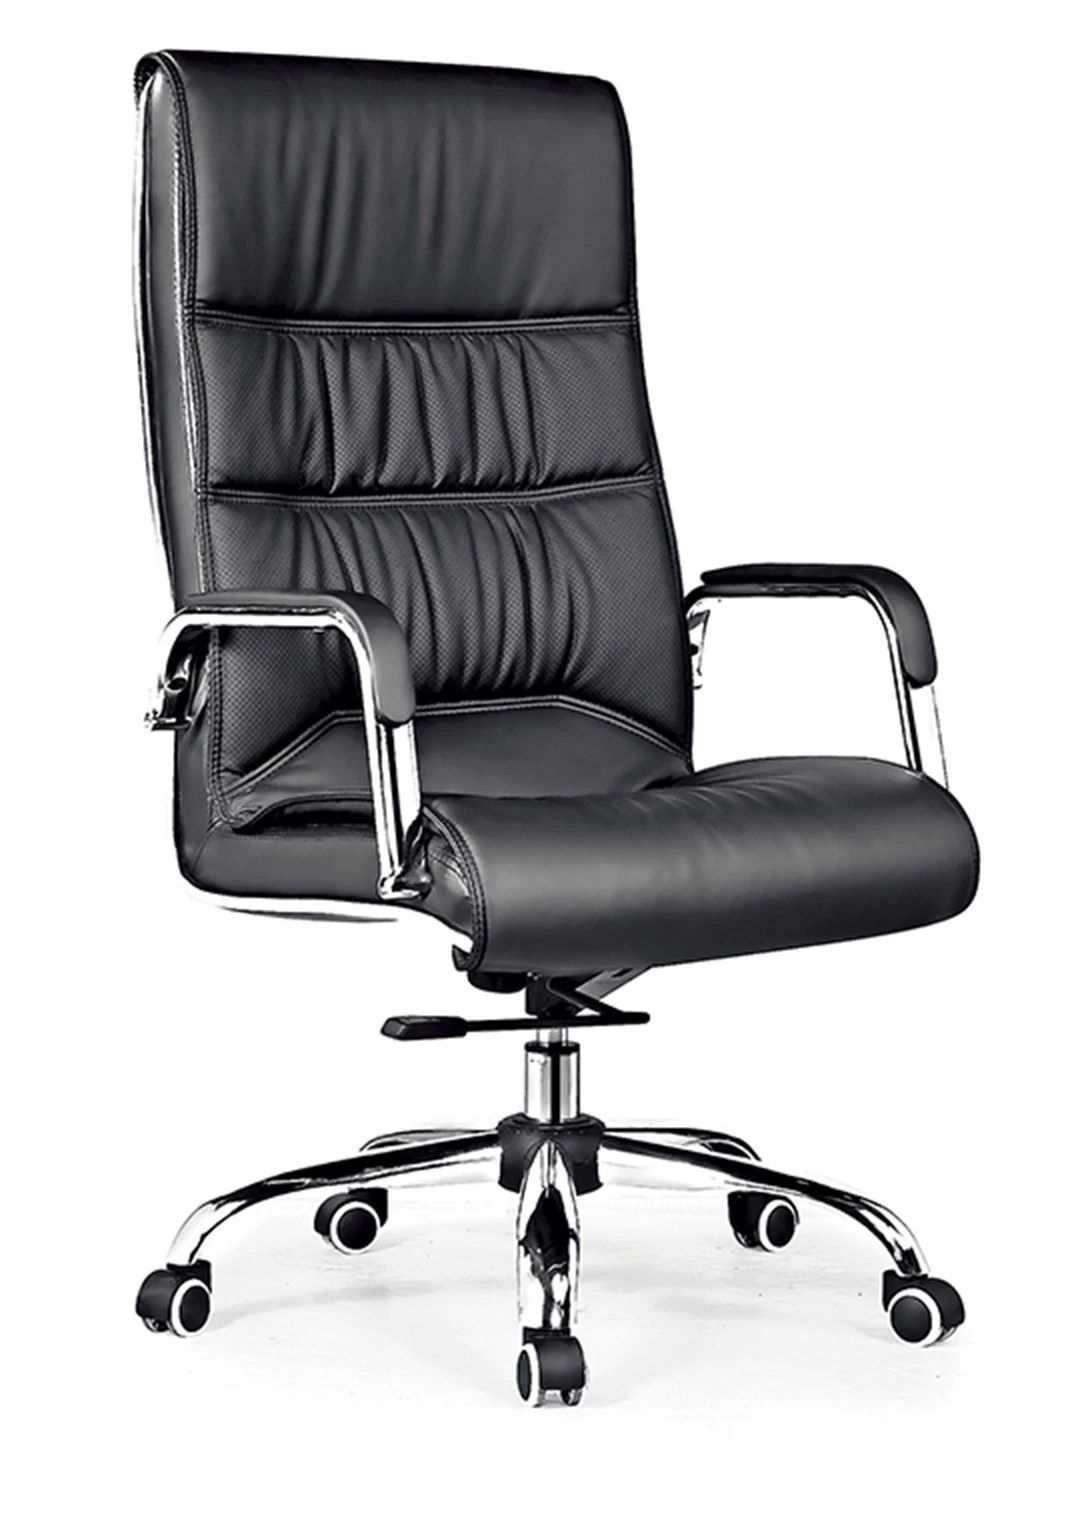 Newcity 636A Boss旋转办公椅热销市场办公椅高背经理办公椅BIFMA标准尼龙脚轮供应商佛山中国